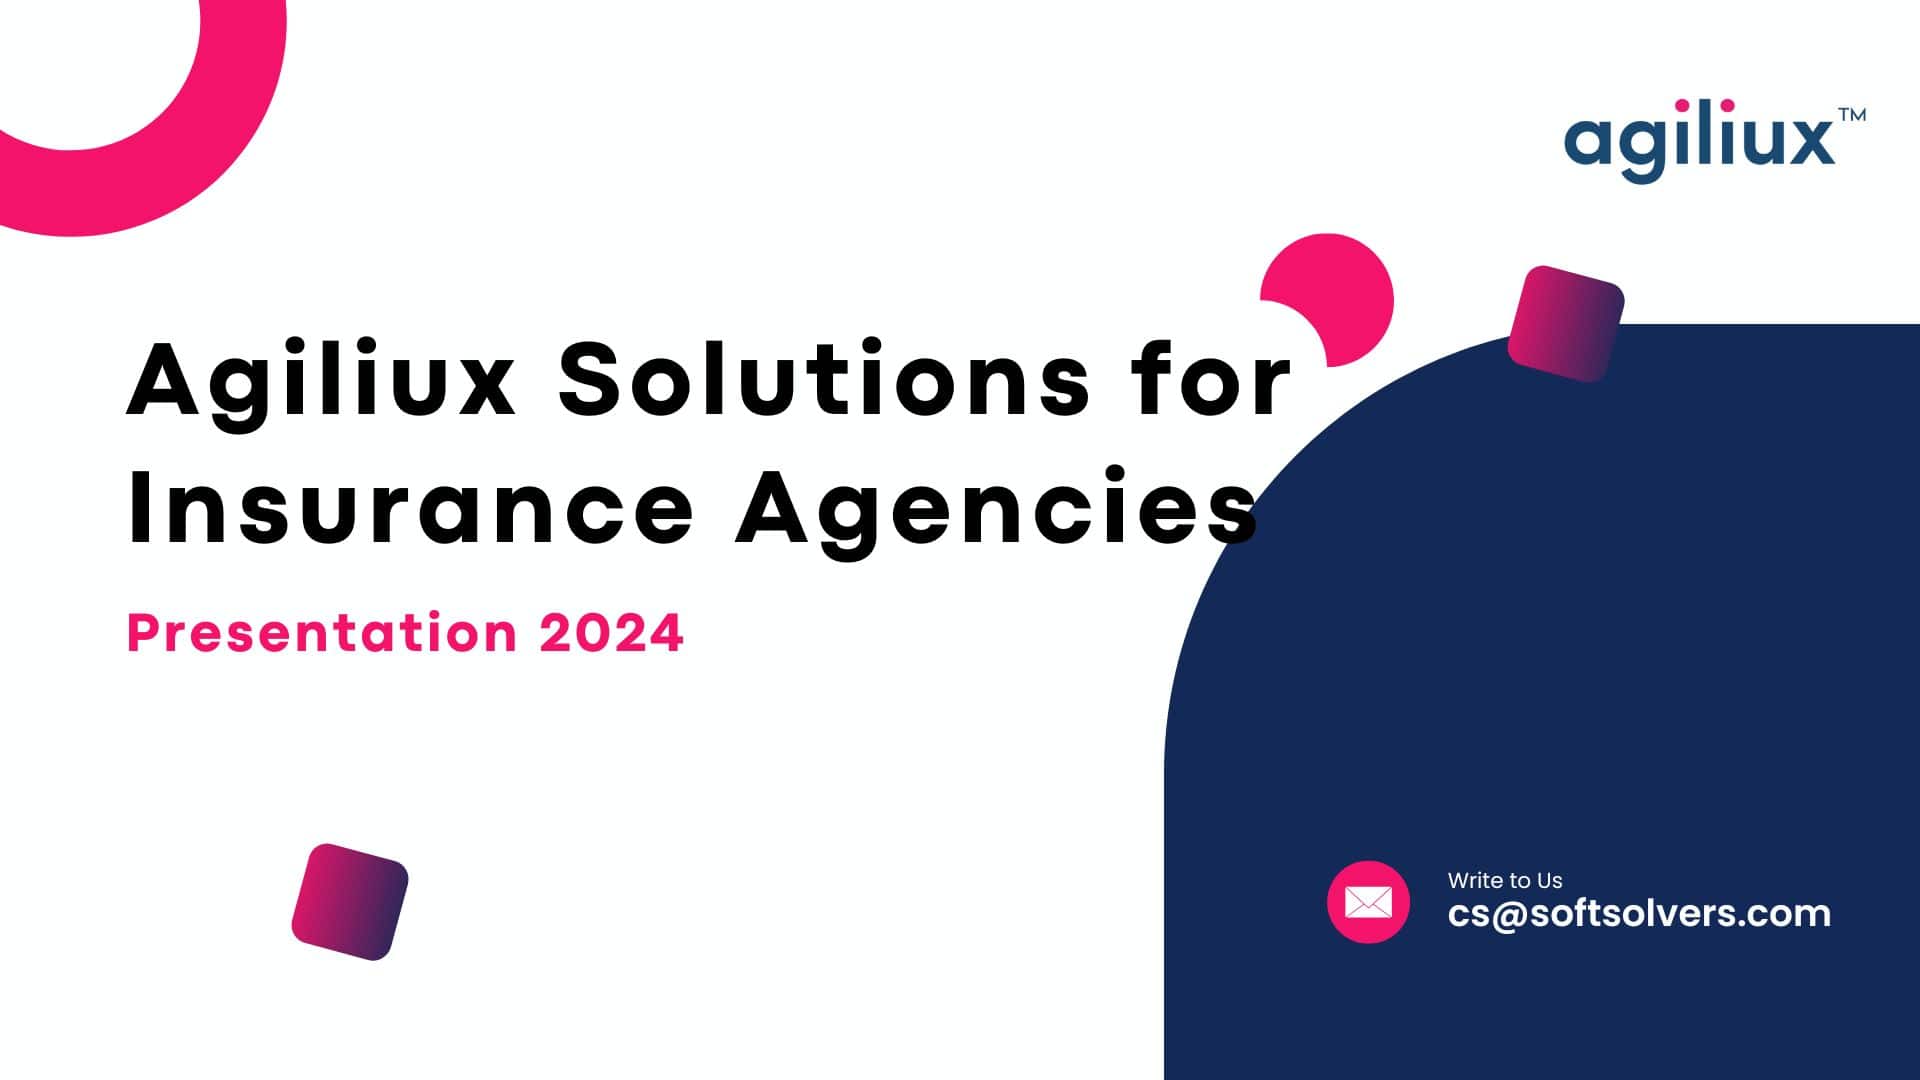 Agiliux Solutions for Insurance Agencies